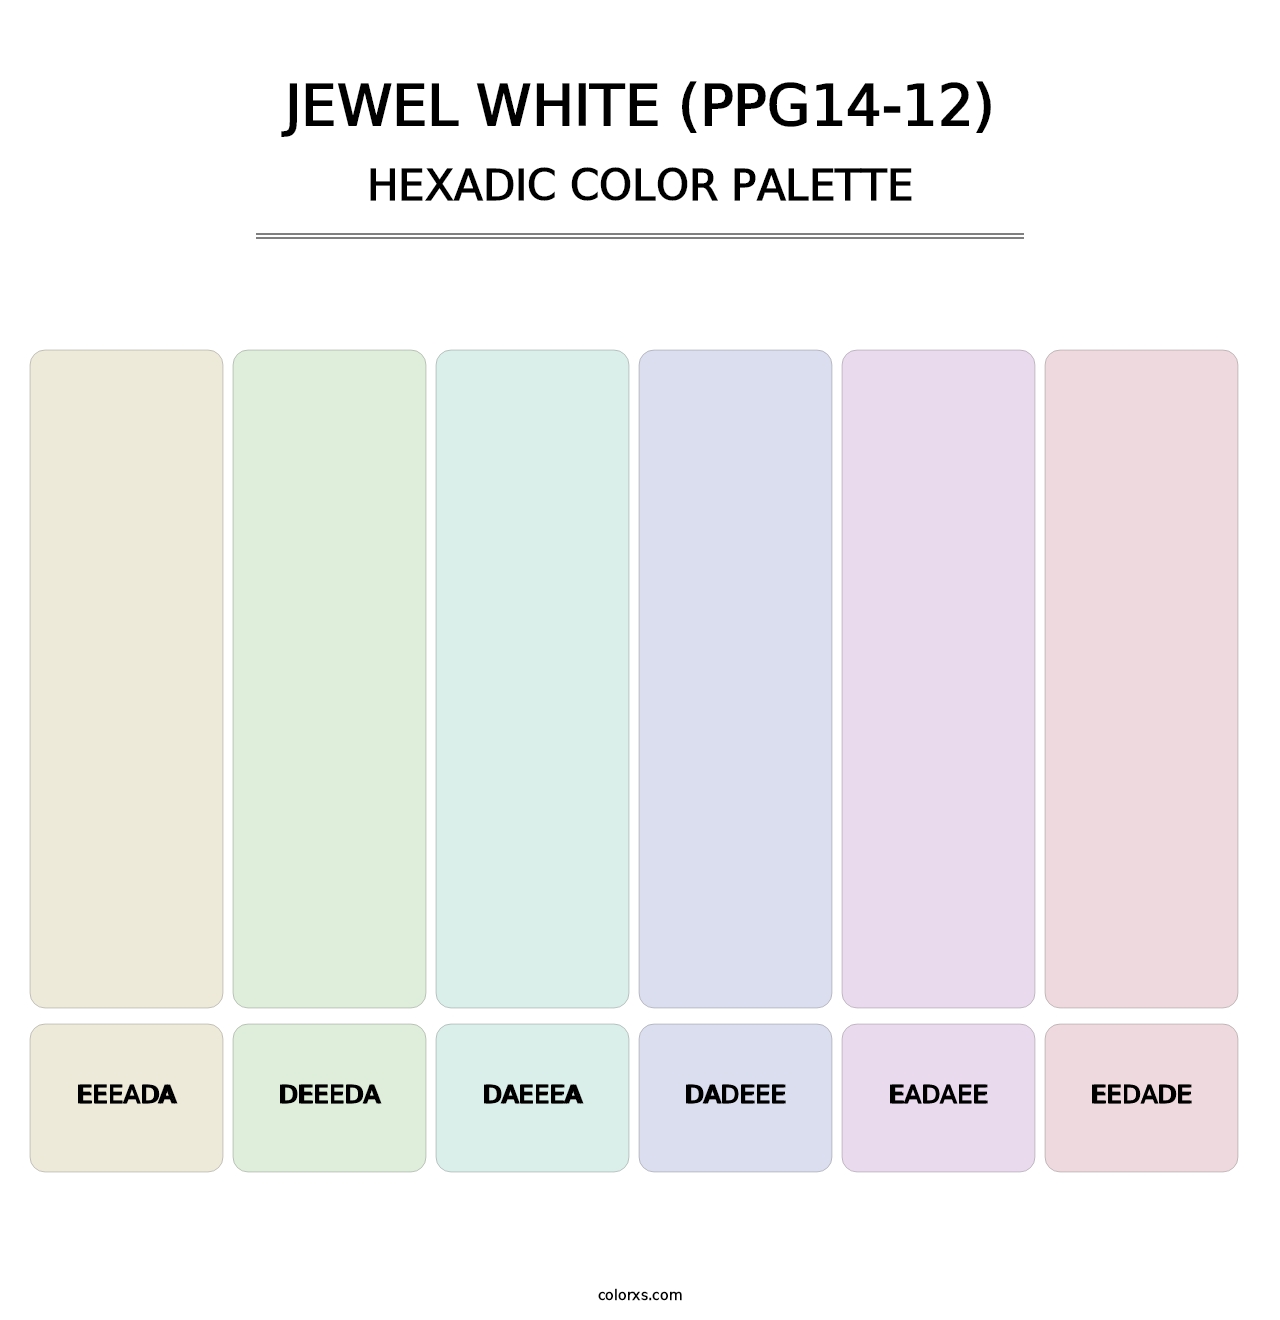 Jewel White (PPG14-12) - Hexadic Color Palette